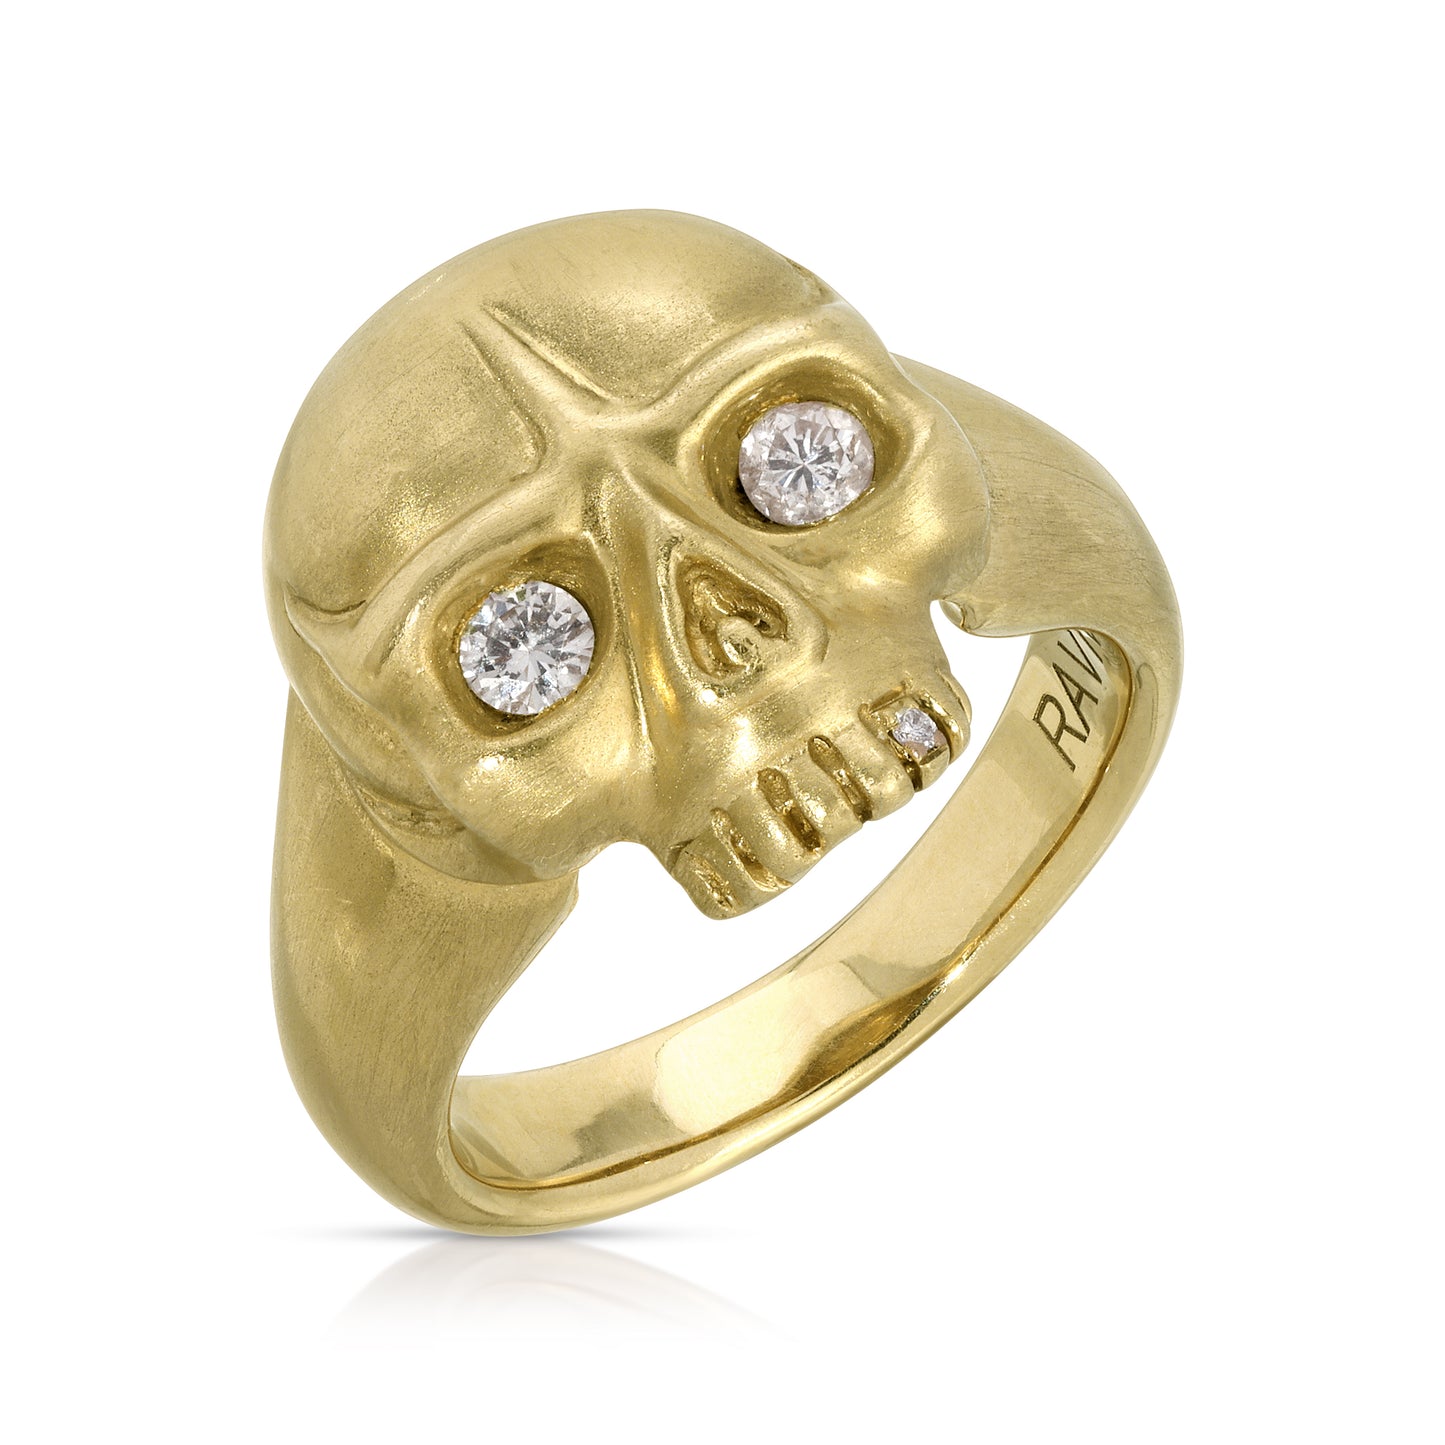 Petite Jawless Skull Ring